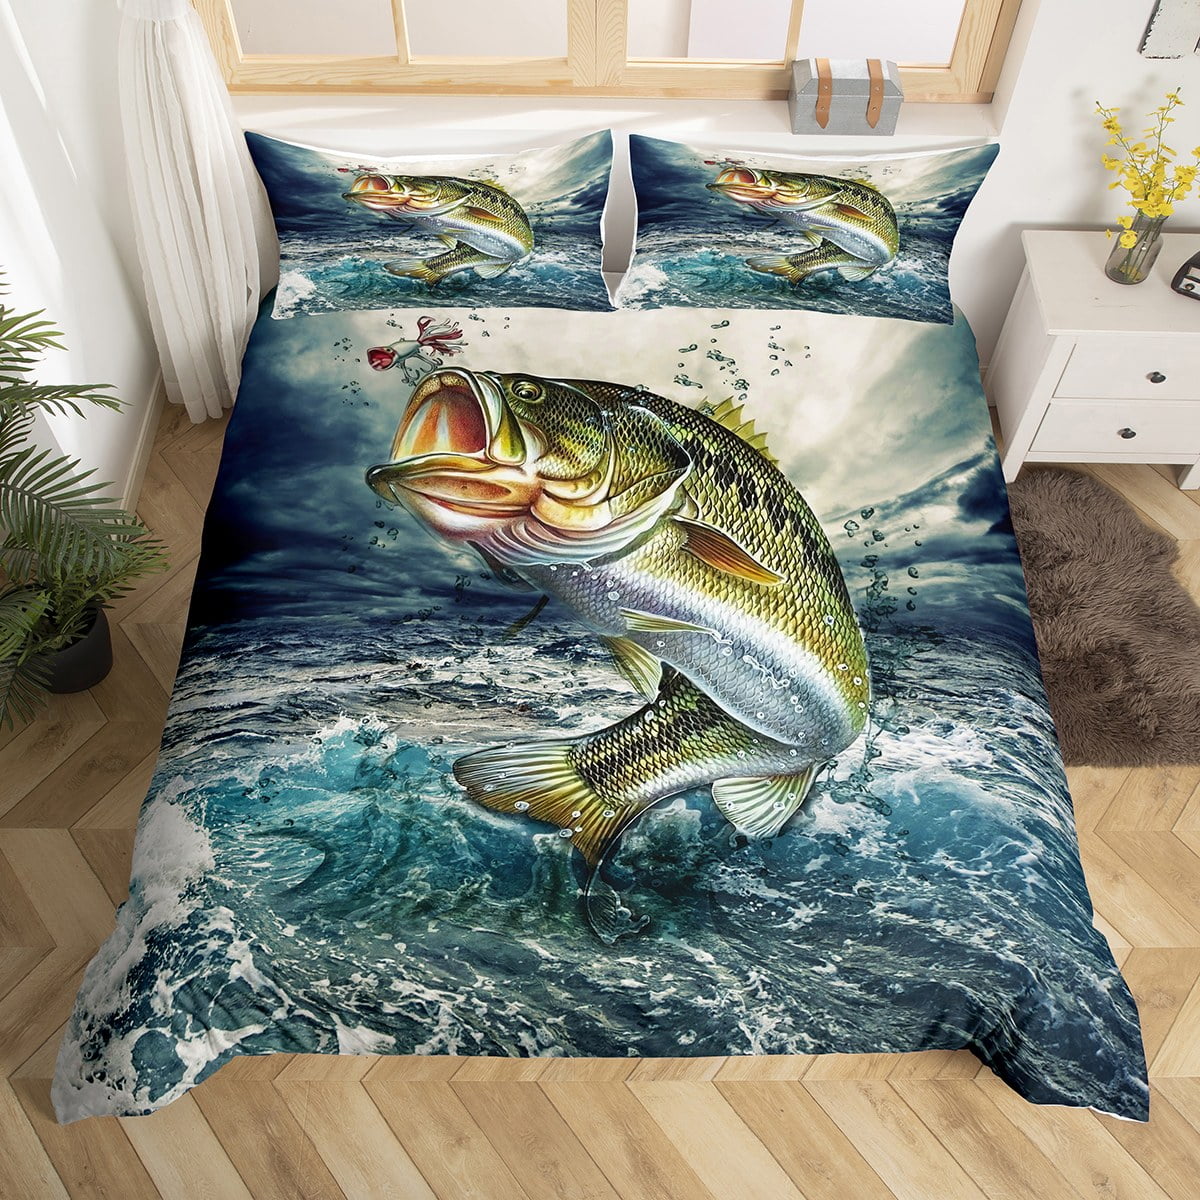 YST Bass Big Fish Comforter Cover Twin Size,Pike Big Fish